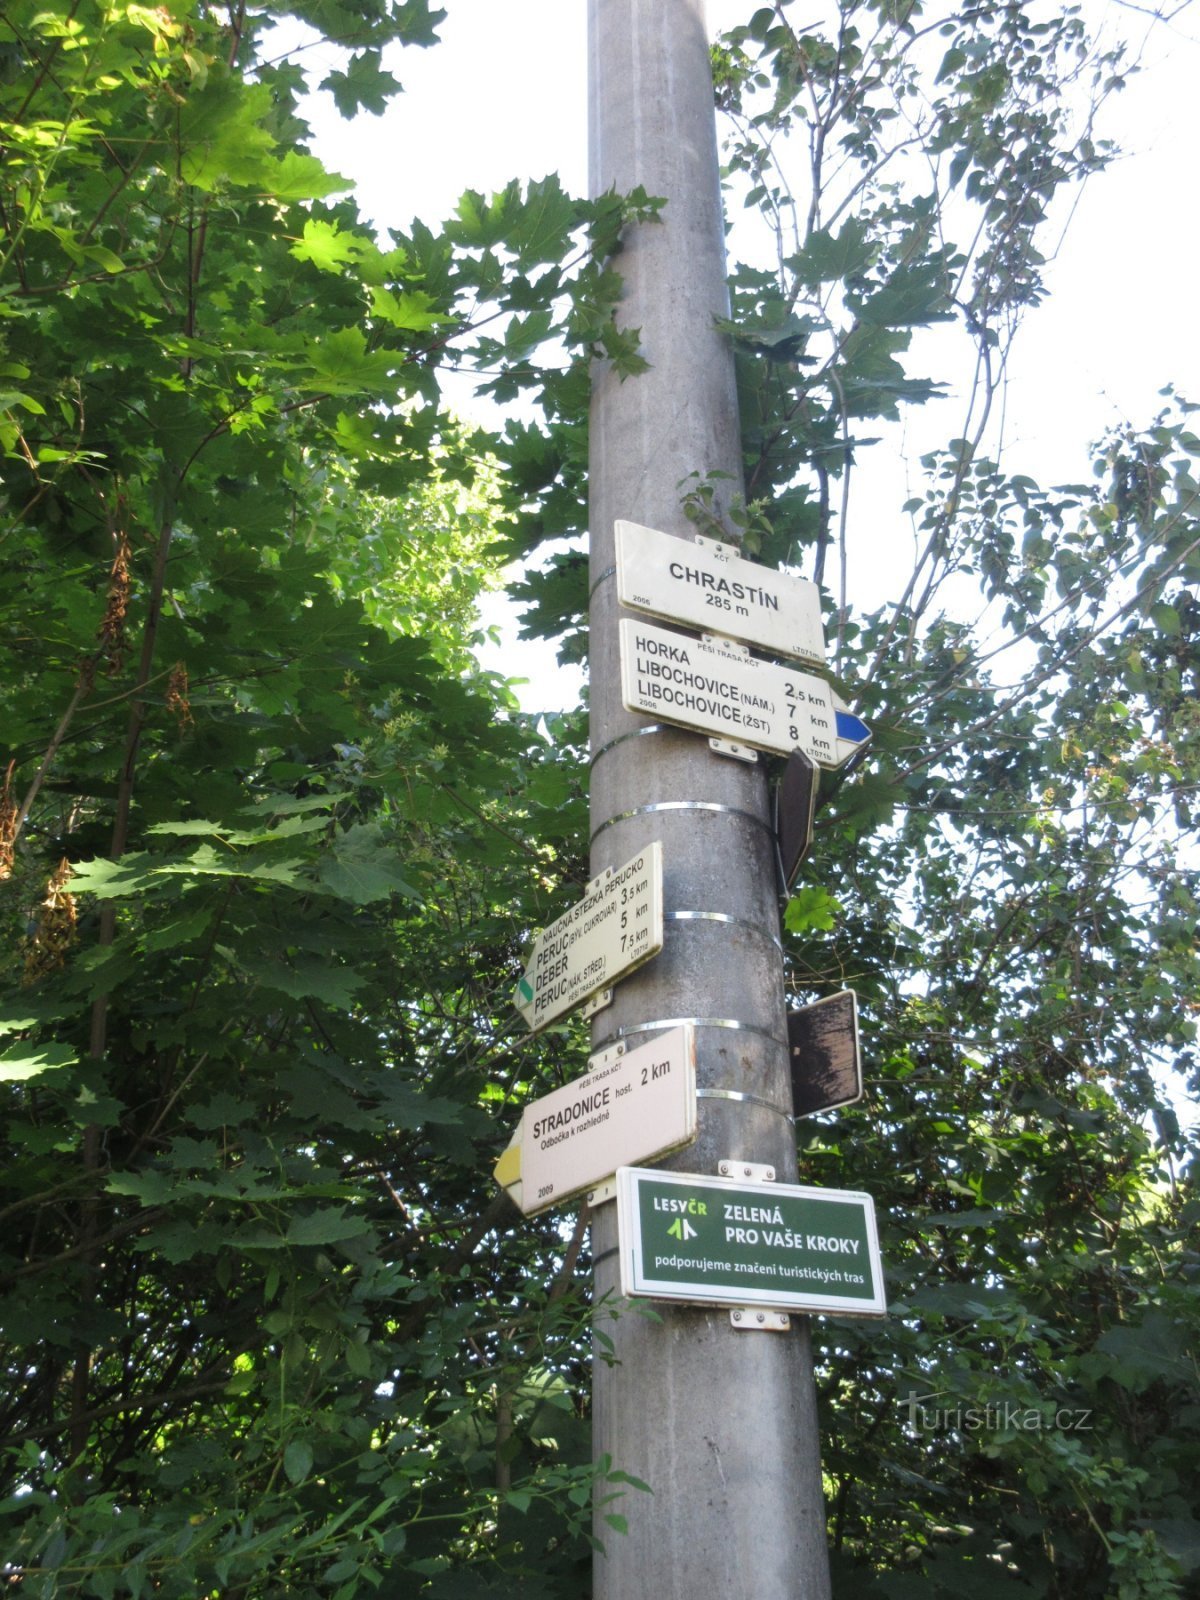 Signpost in Chrastín